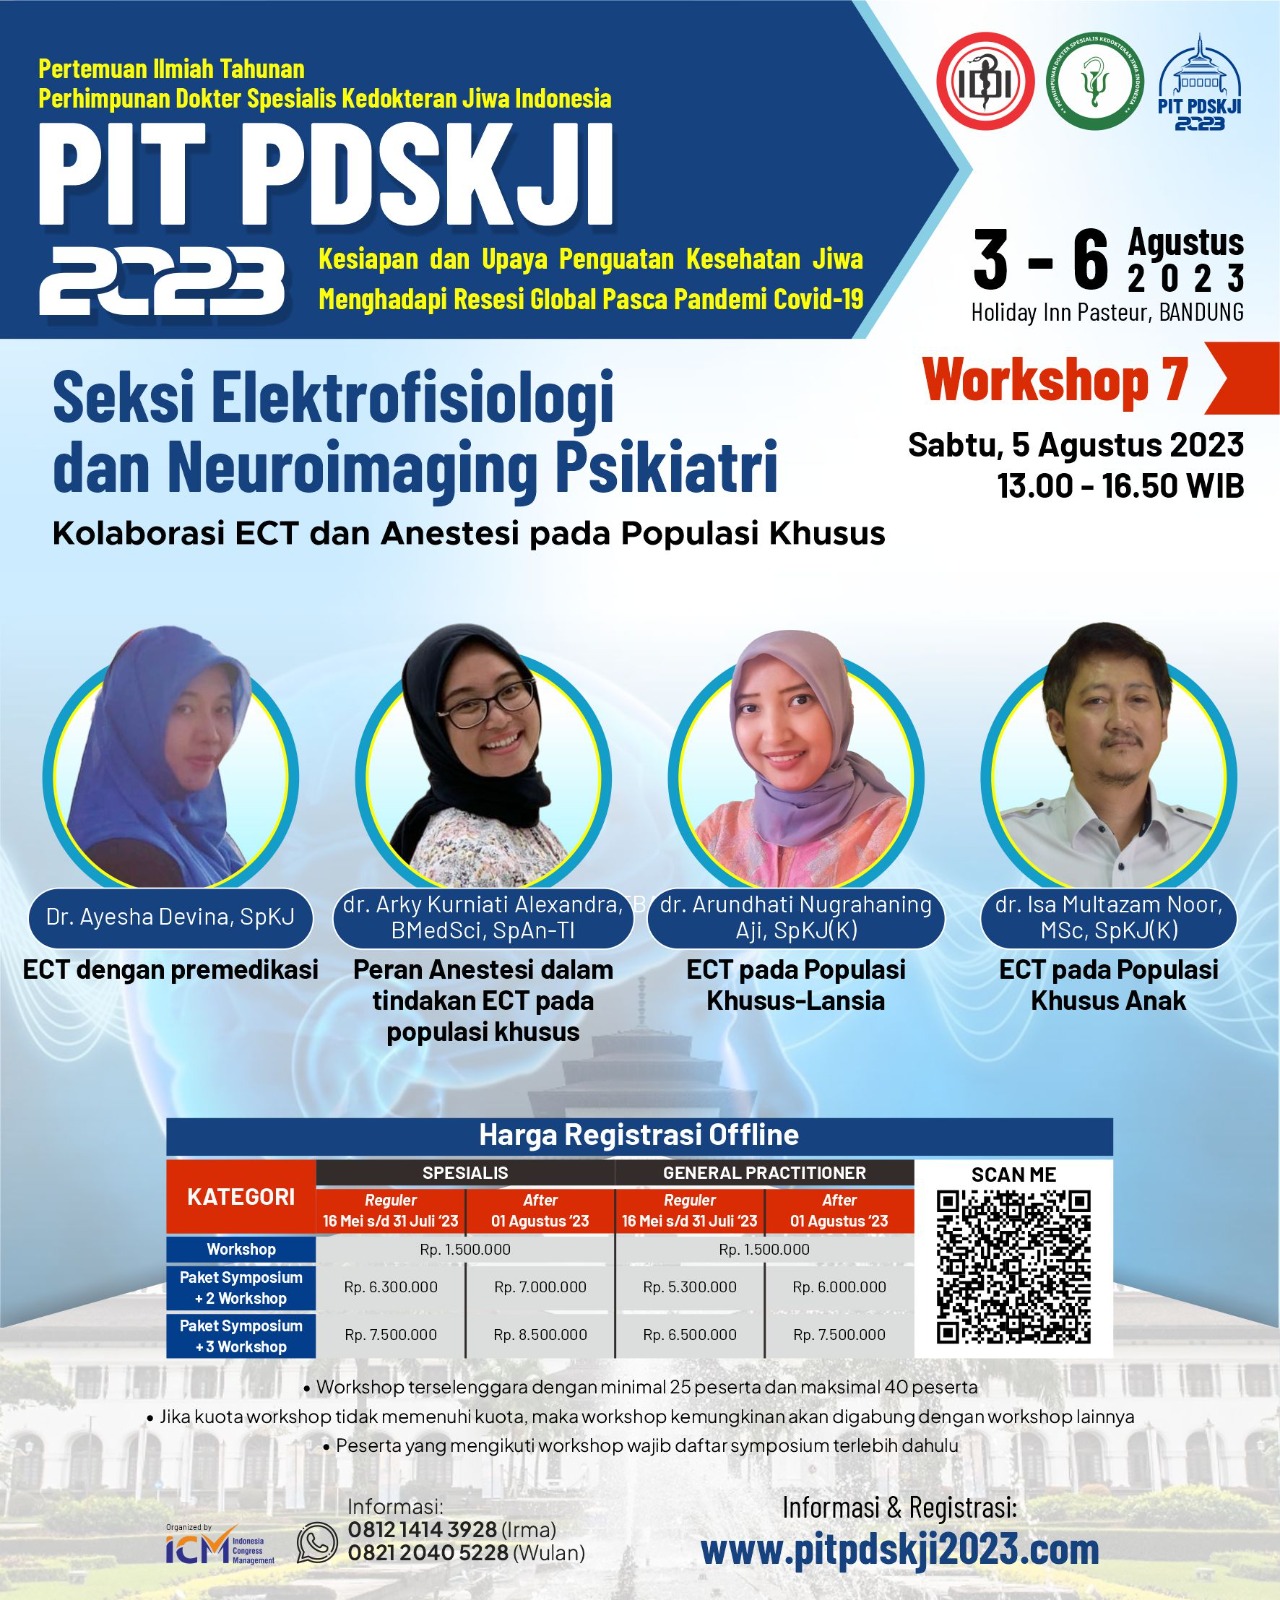 PIT PDSKJI Workshop 7 : Seksi Elektrofisiologi dan Neuroimaging Psikiatri